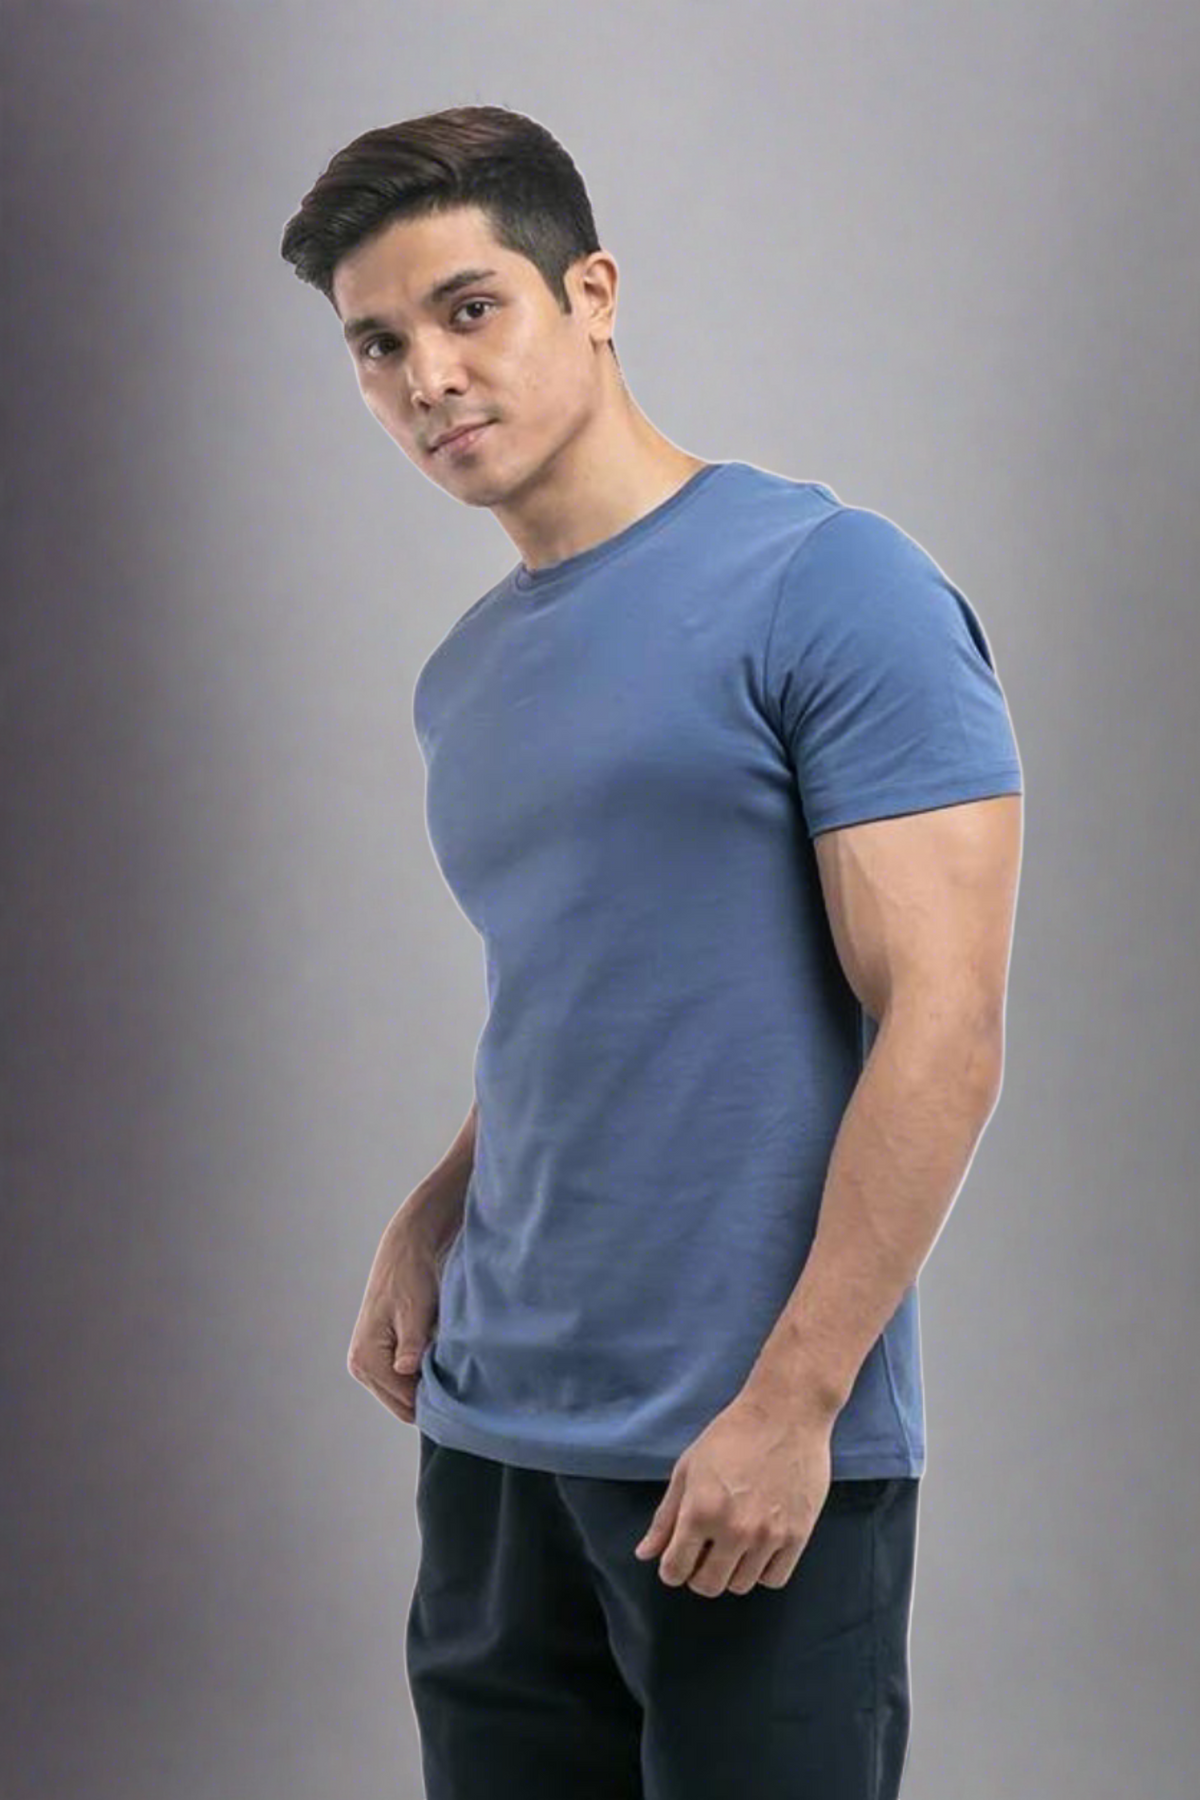 Cotton Short Sleeve T-Shirt (Stretchable) Blue